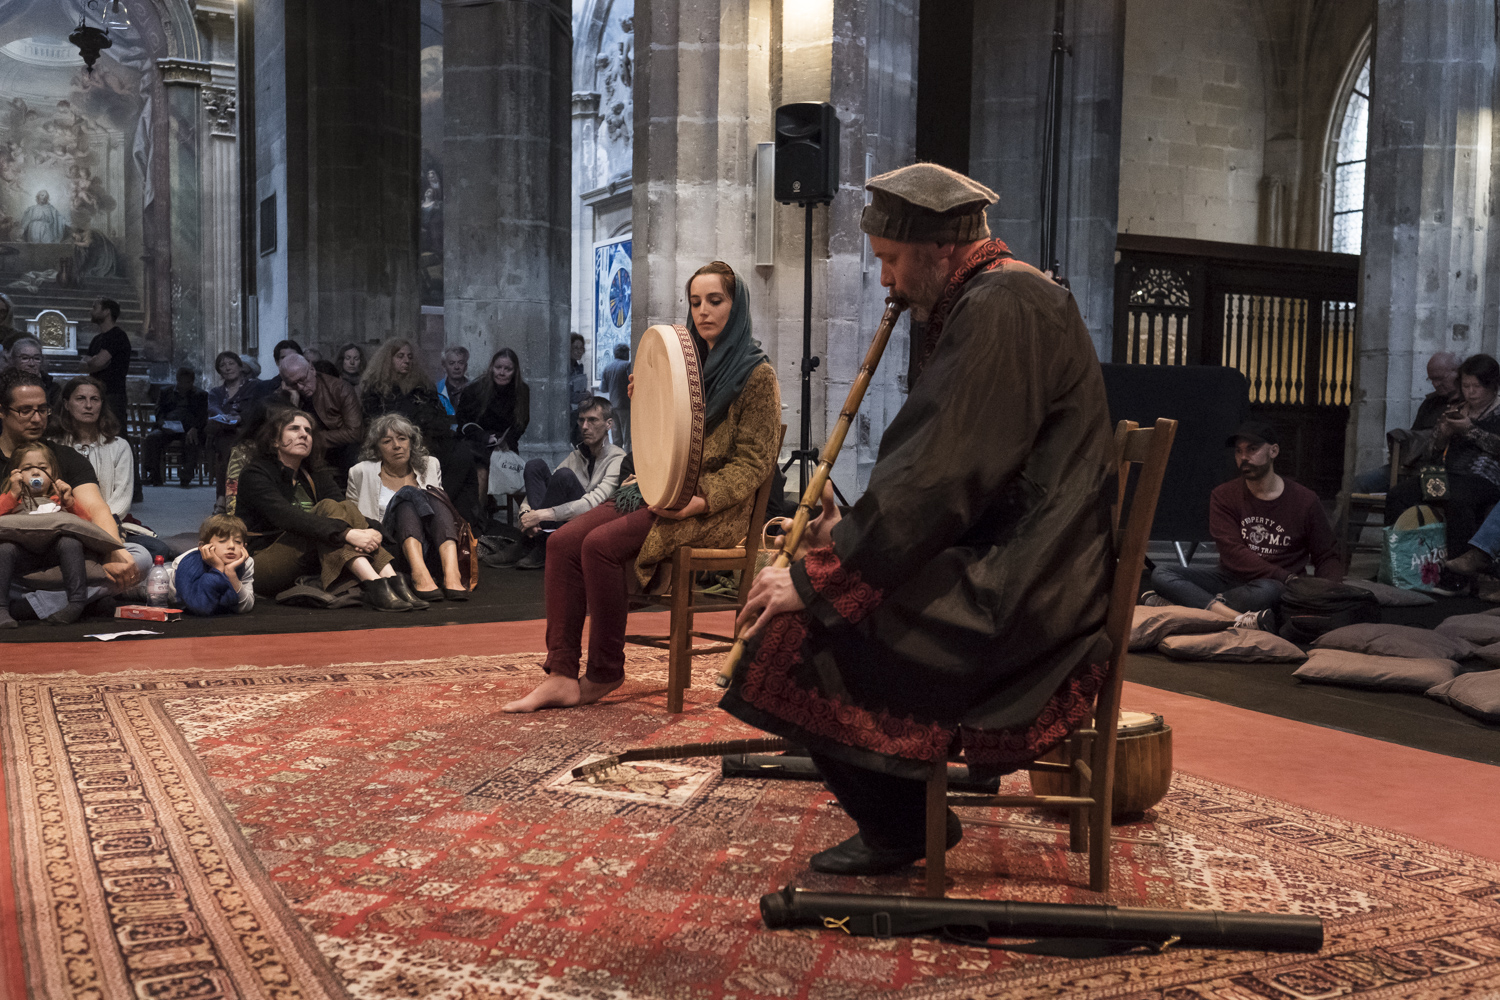 The ensemble "Lale" plays spiritual music from the Ottoman Empire on 8 June 2019 (photo: Jan Schmidt-Whitley / Le Pictorium)